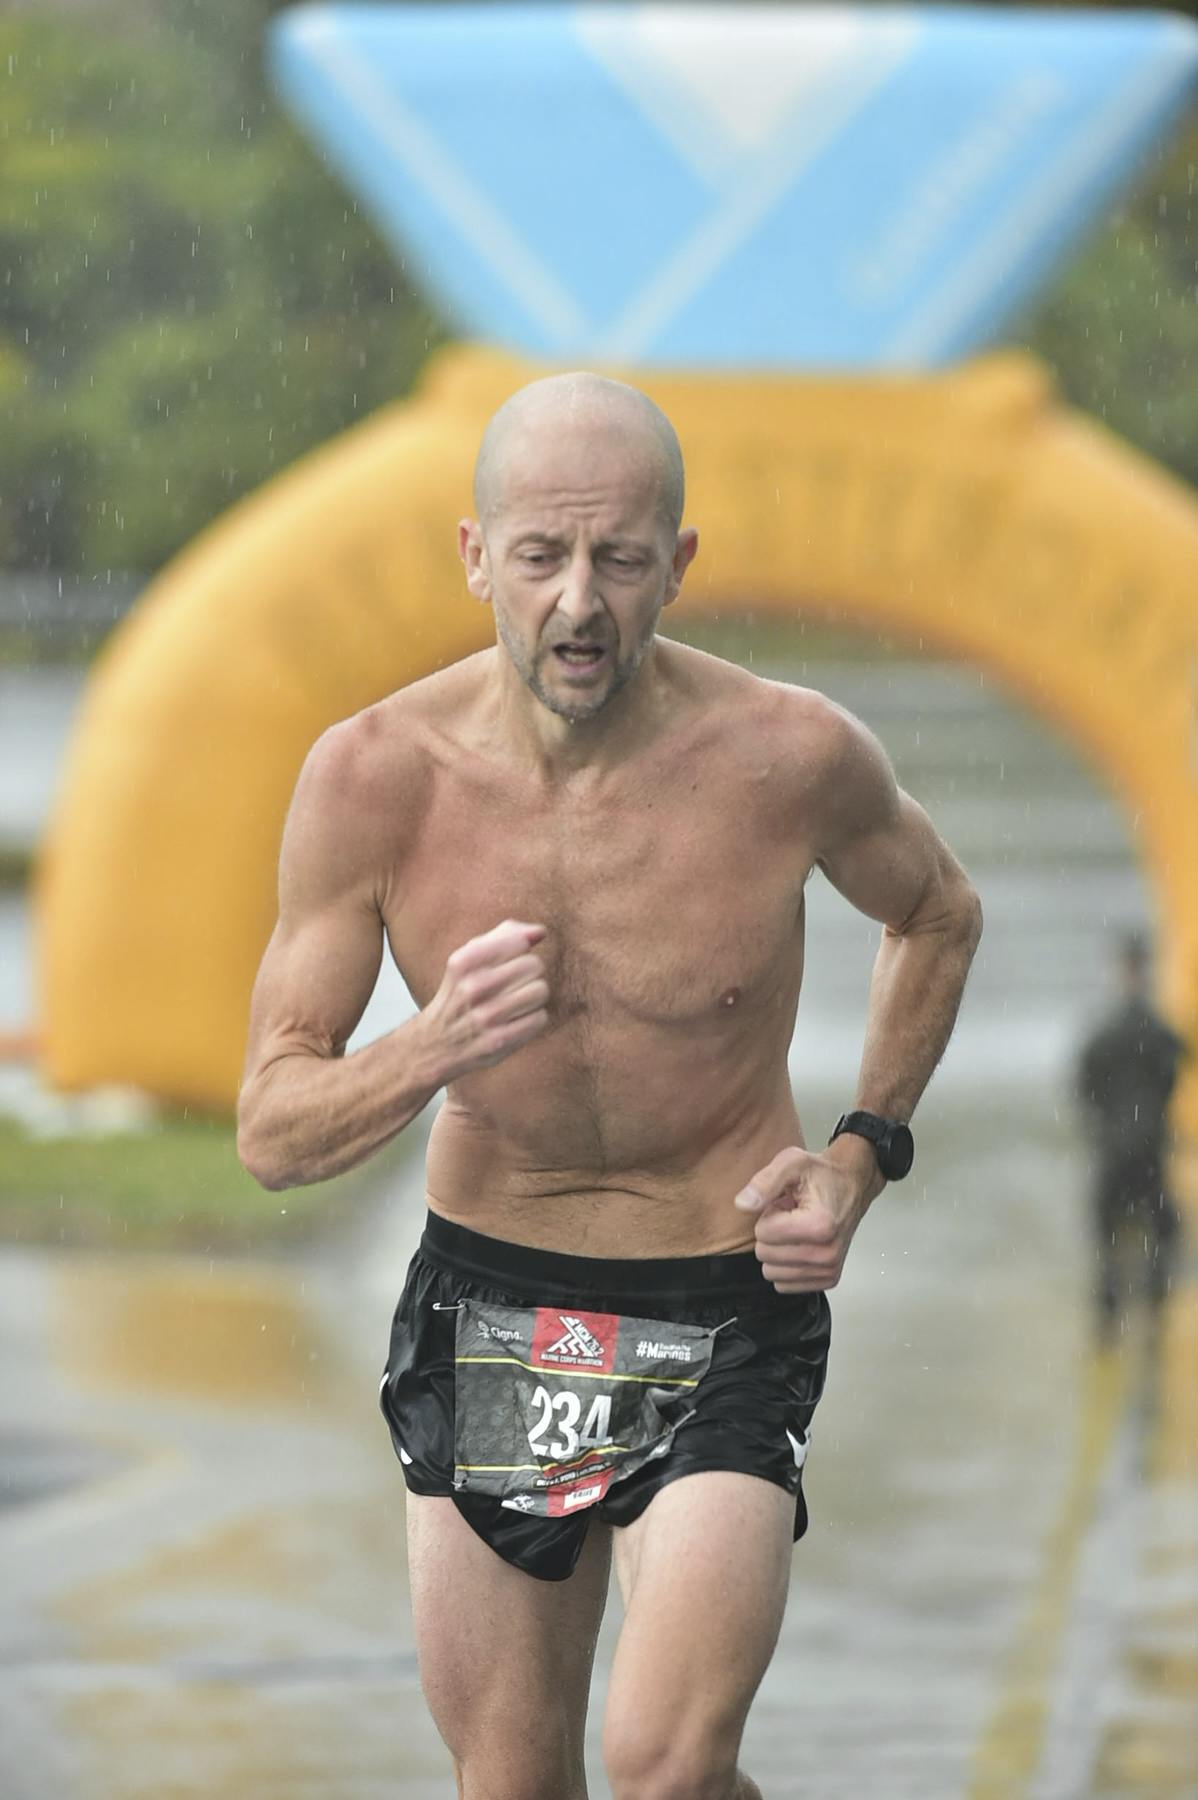 Boston Marathon at age 48